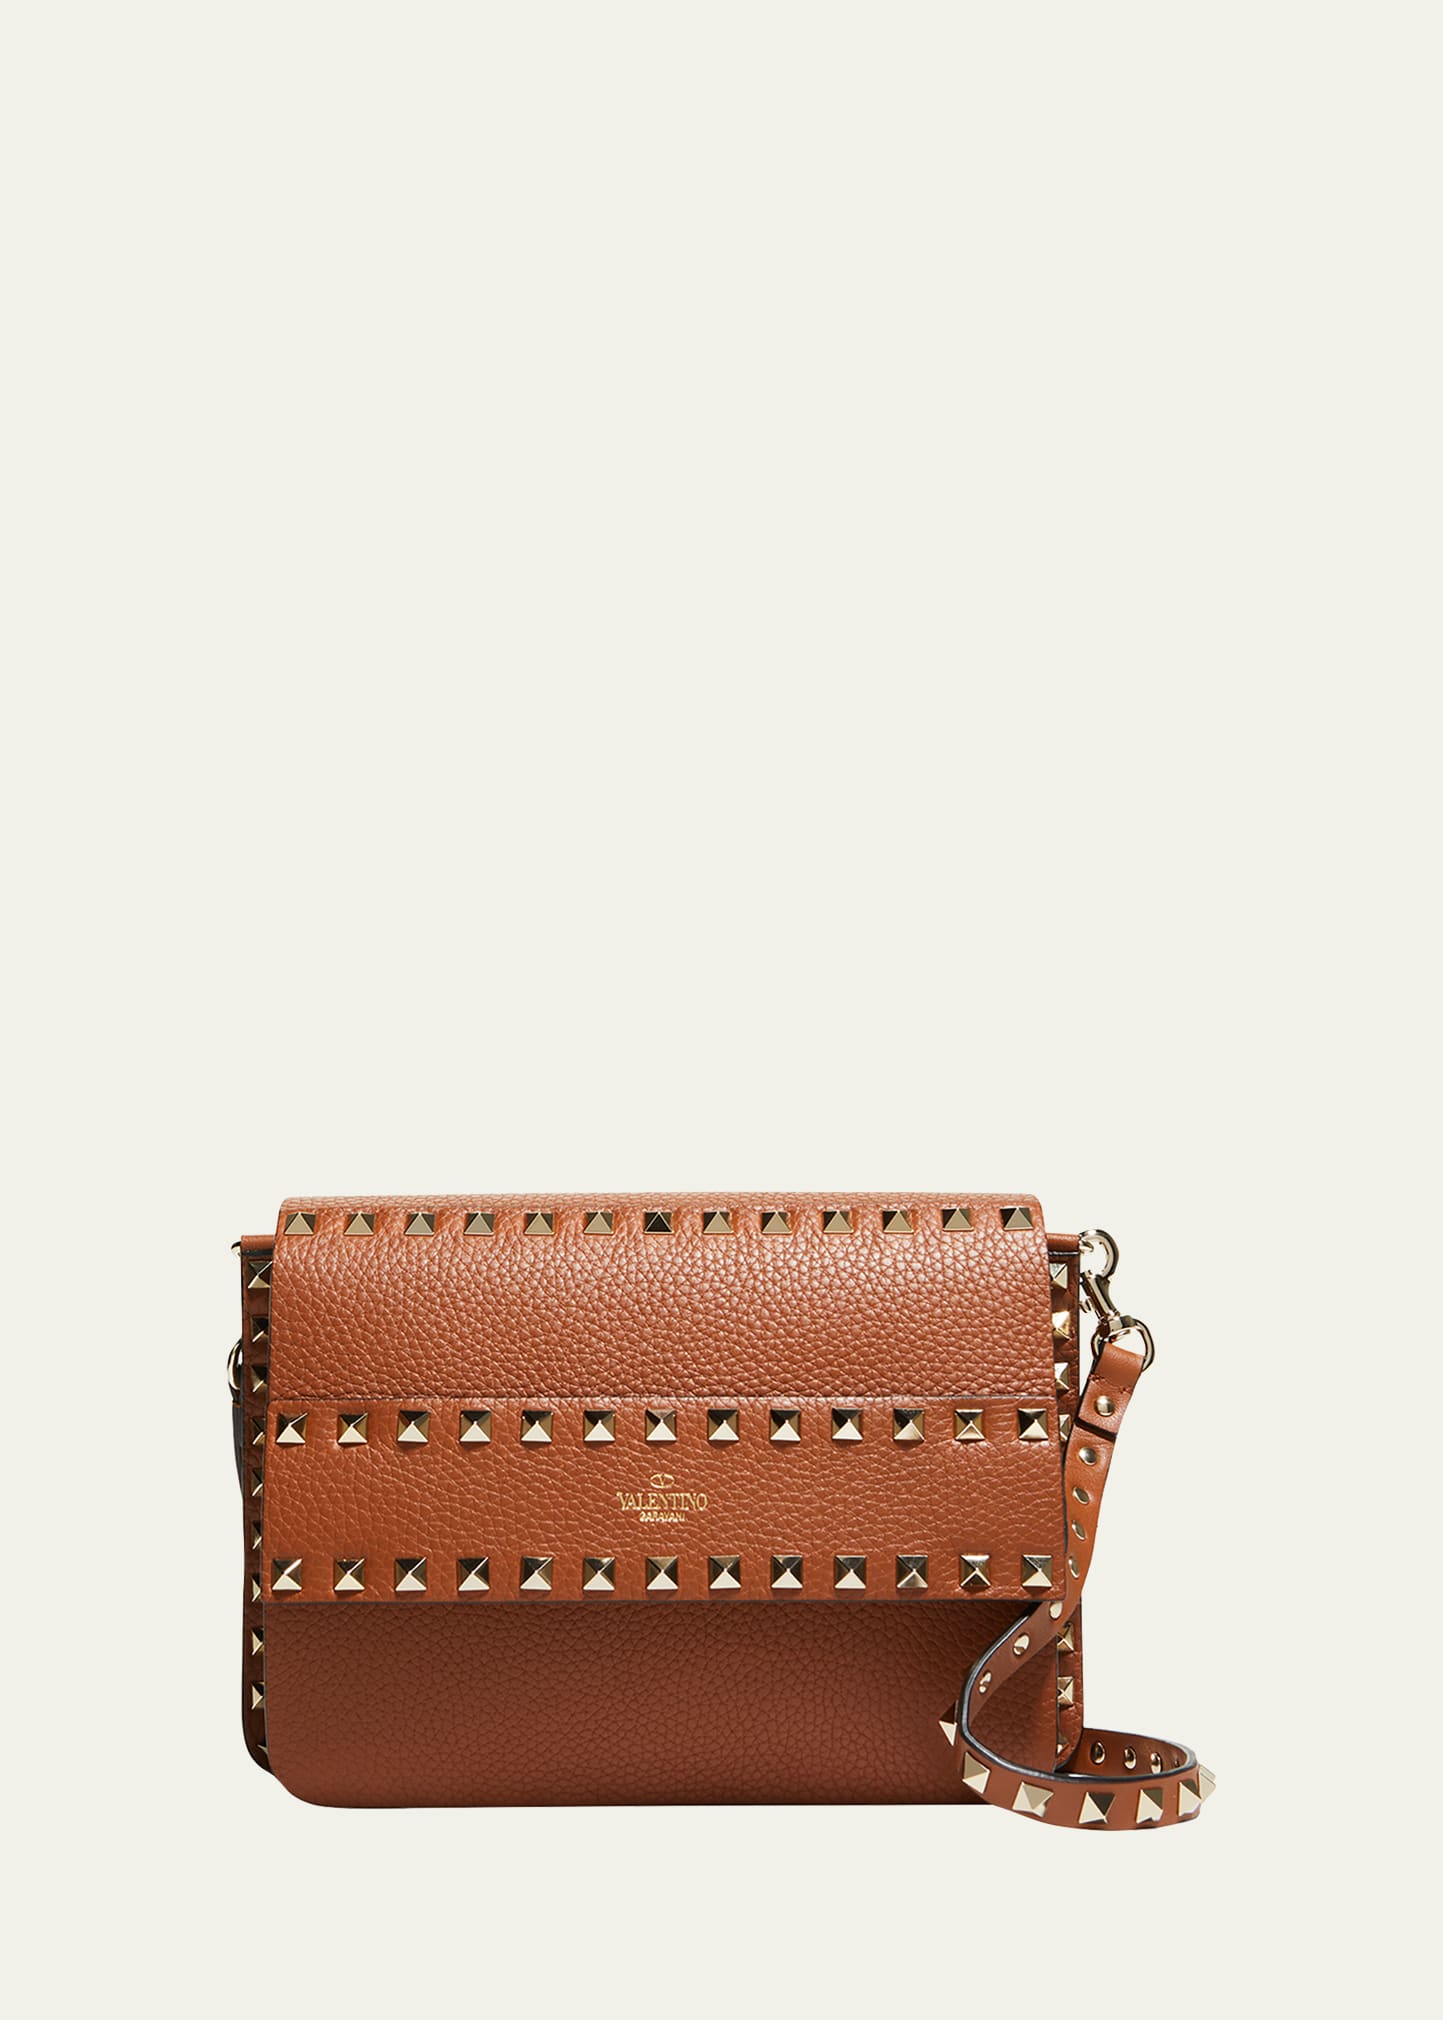 Valentino Garavani Rockstud Small Leather Shoulder Bag